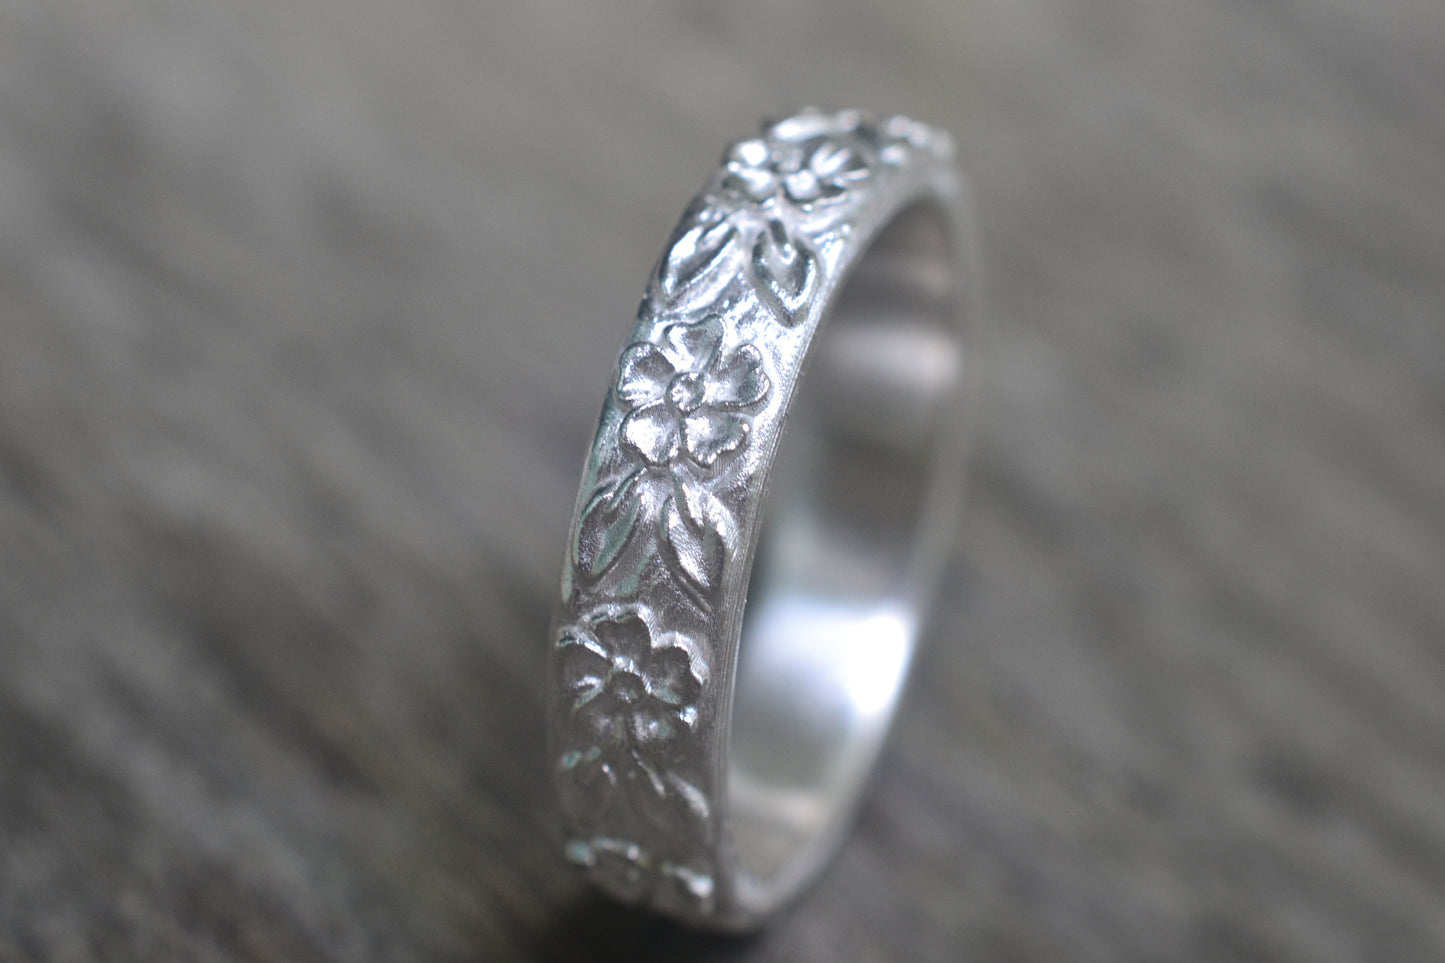 5mm Wide 925 Silver Flower Wedding Ring